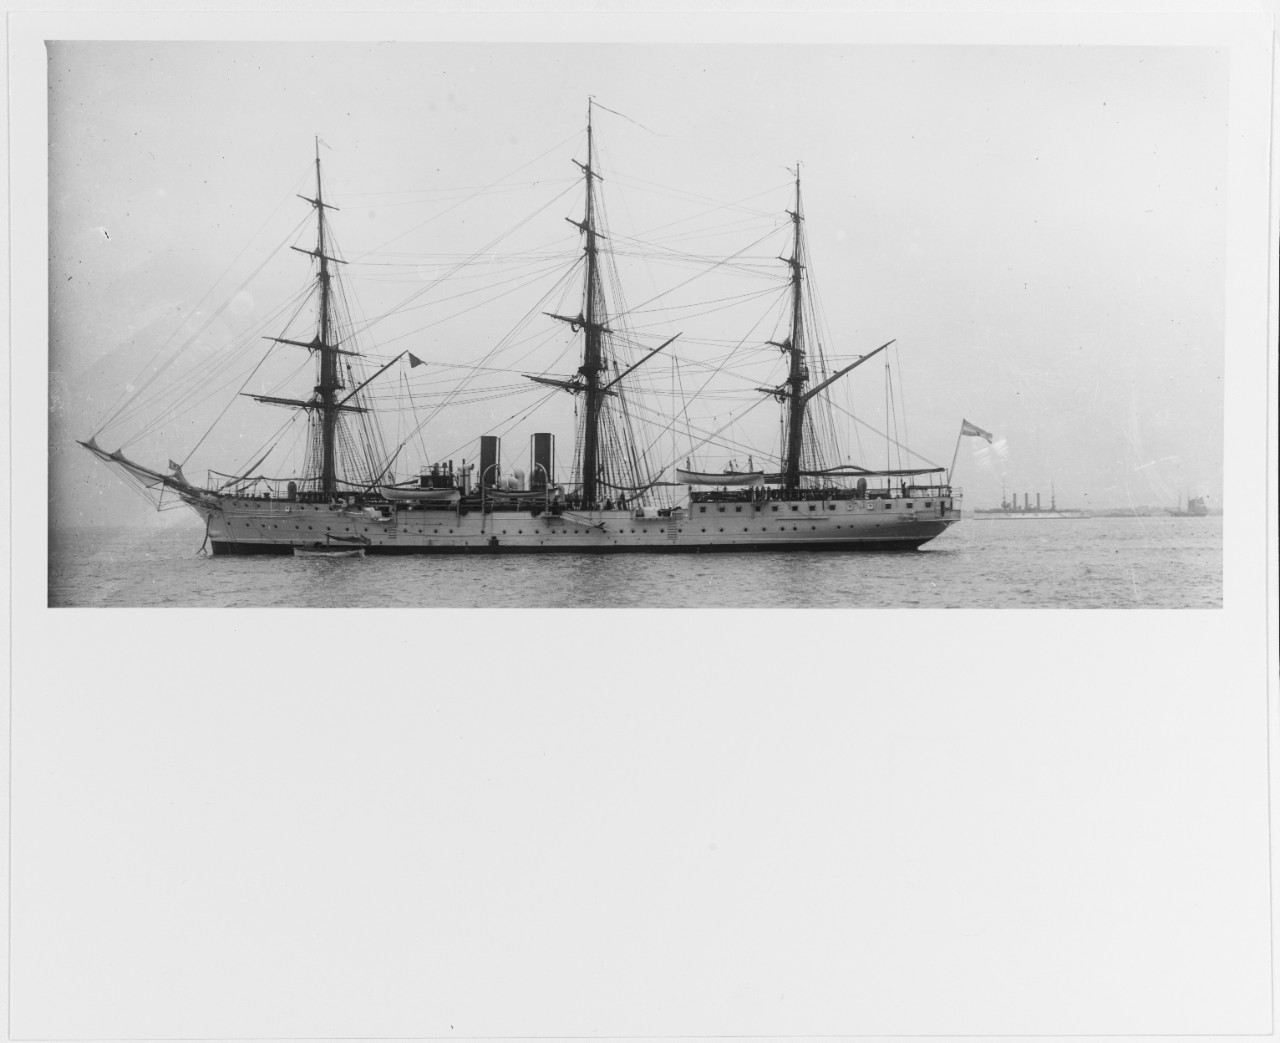 PRESIDENTE SARMIENTO (Argentine training ship, 1897)